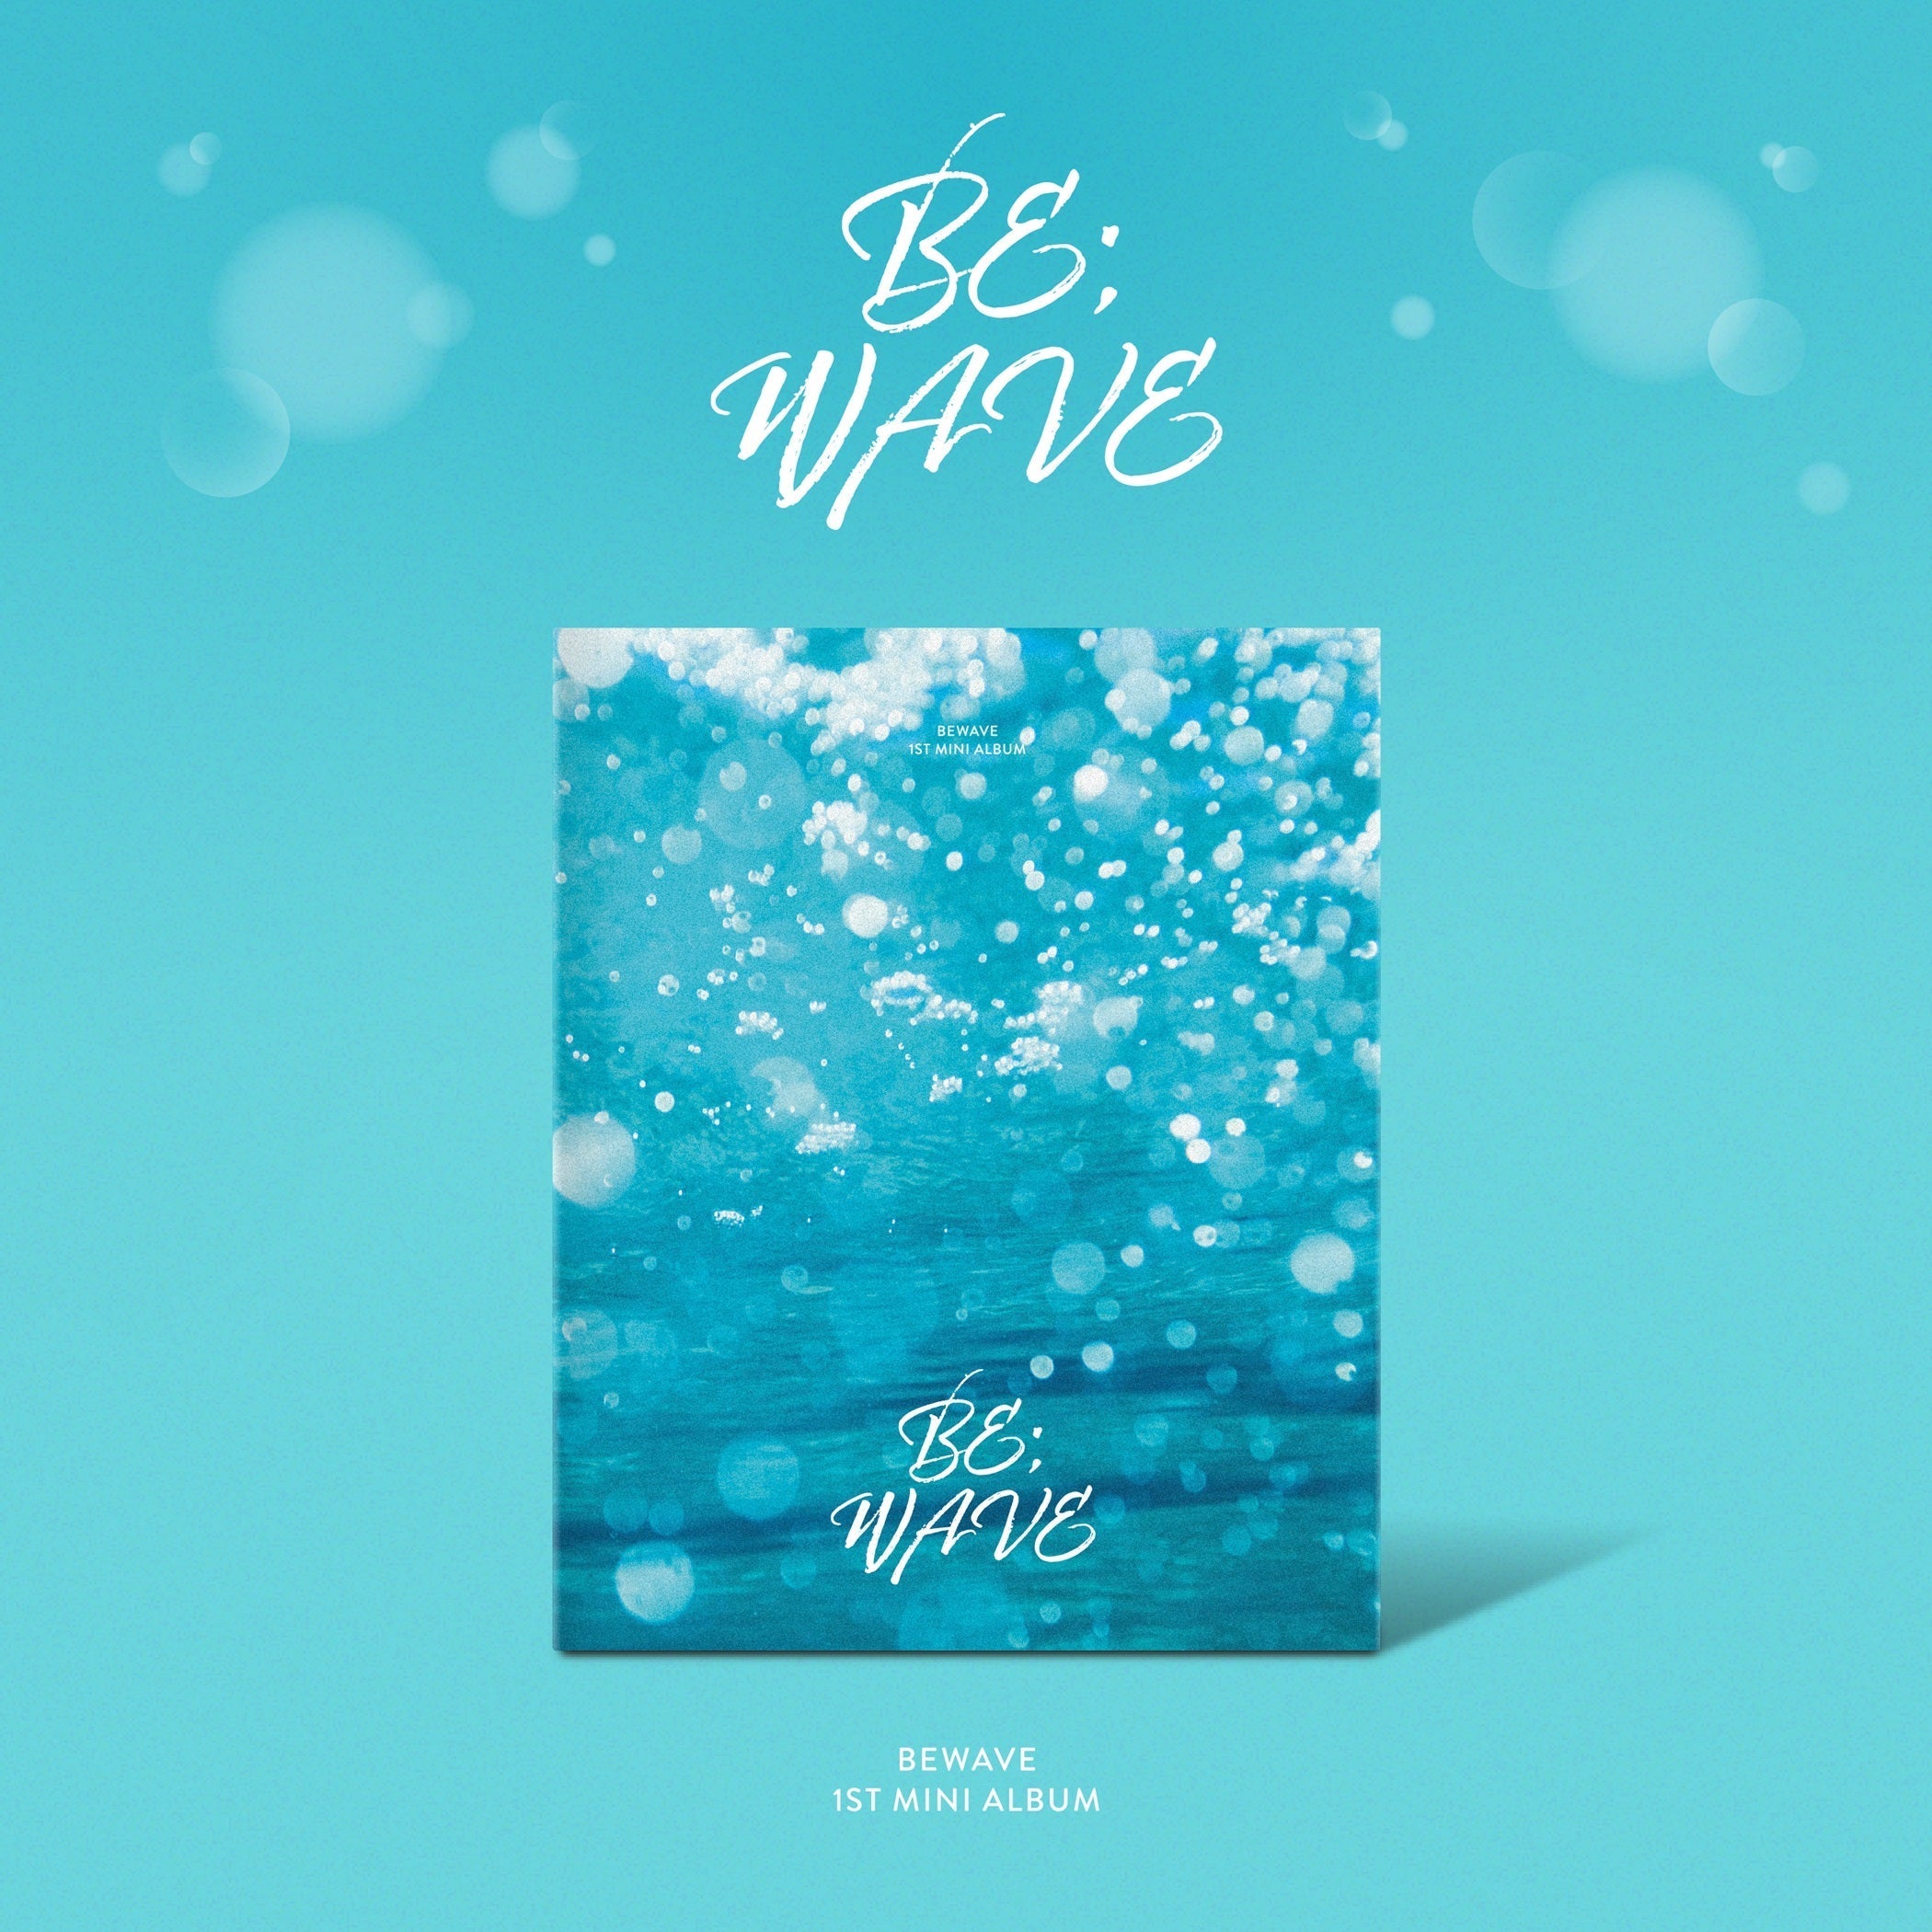 BEWAVE - 1ST MINI ALBUM [BE;WAVE] - KPOPHERO